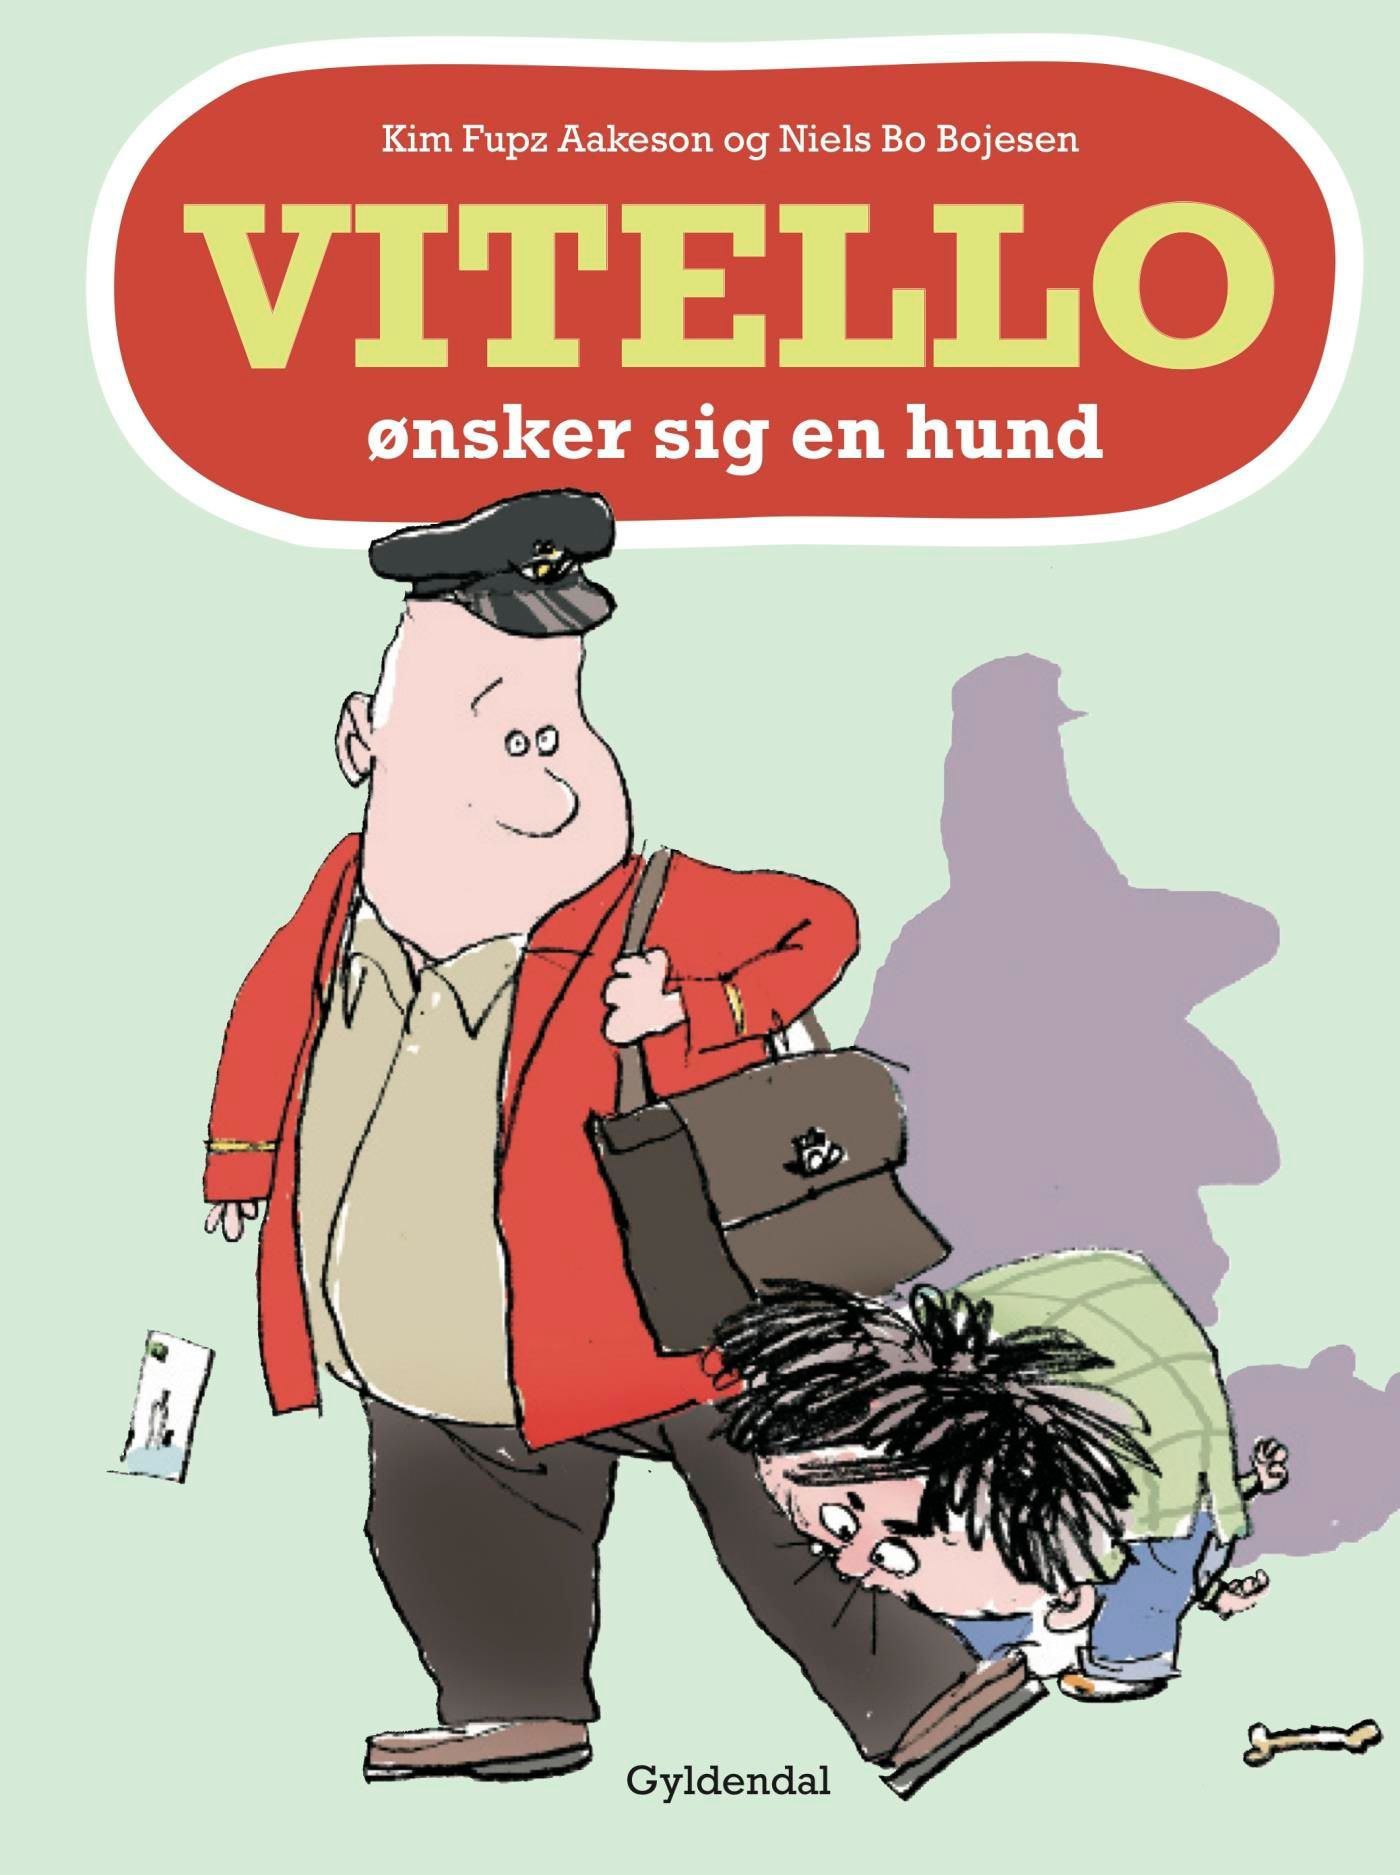 Vitello ønsker sig en hund - Lyt&læs, eBook by Niels Bo Bojesen, Kim Fupz Aakeson